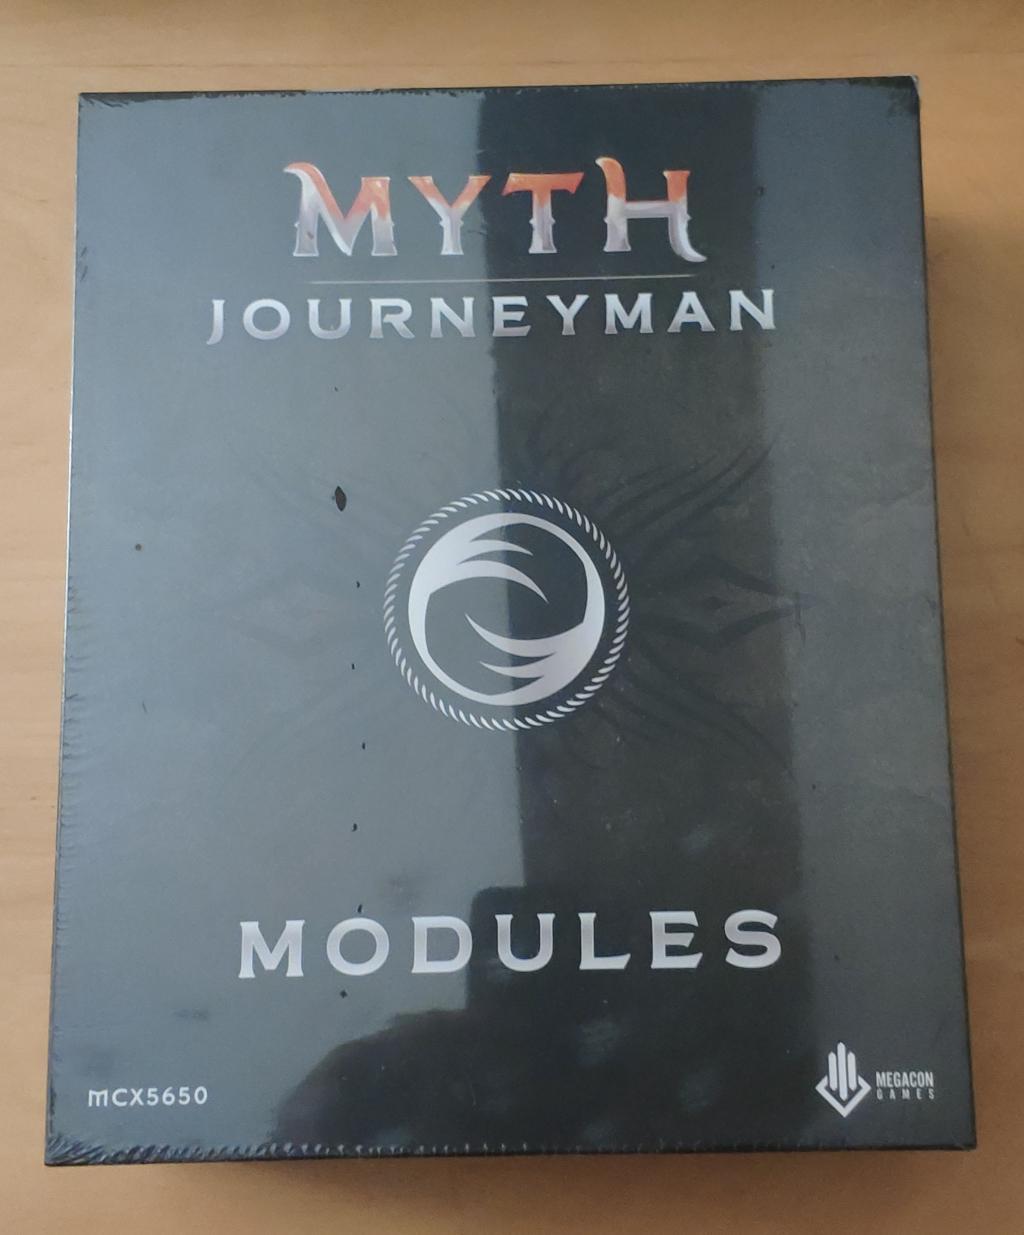 Myth - Modules